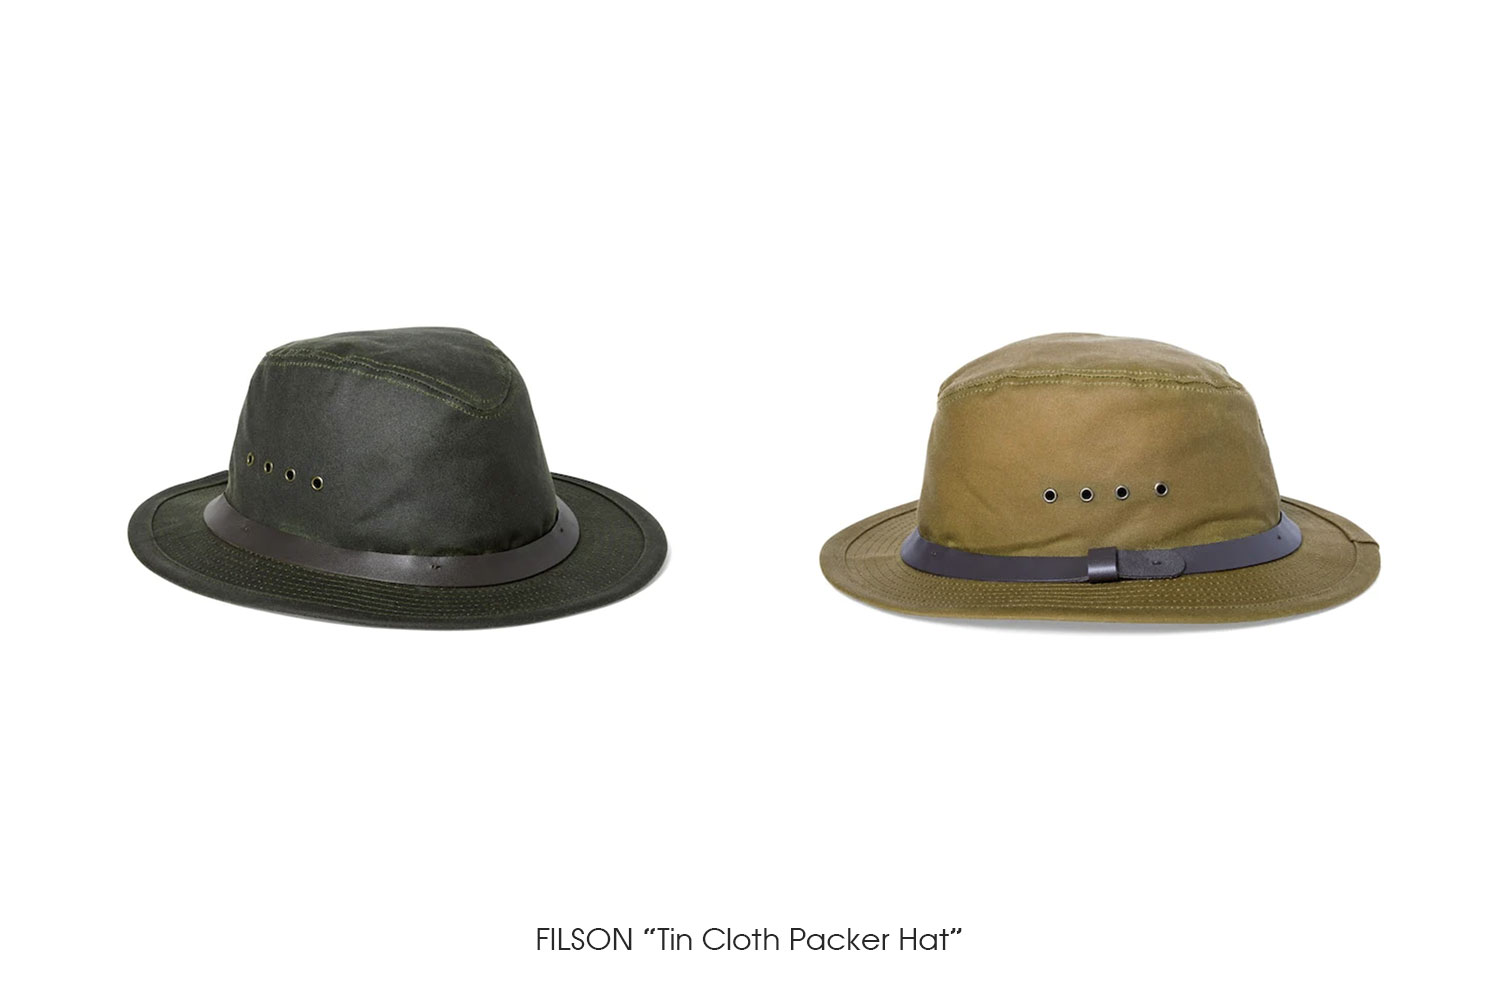 FILSON "Tin Cloth Packer Hat"